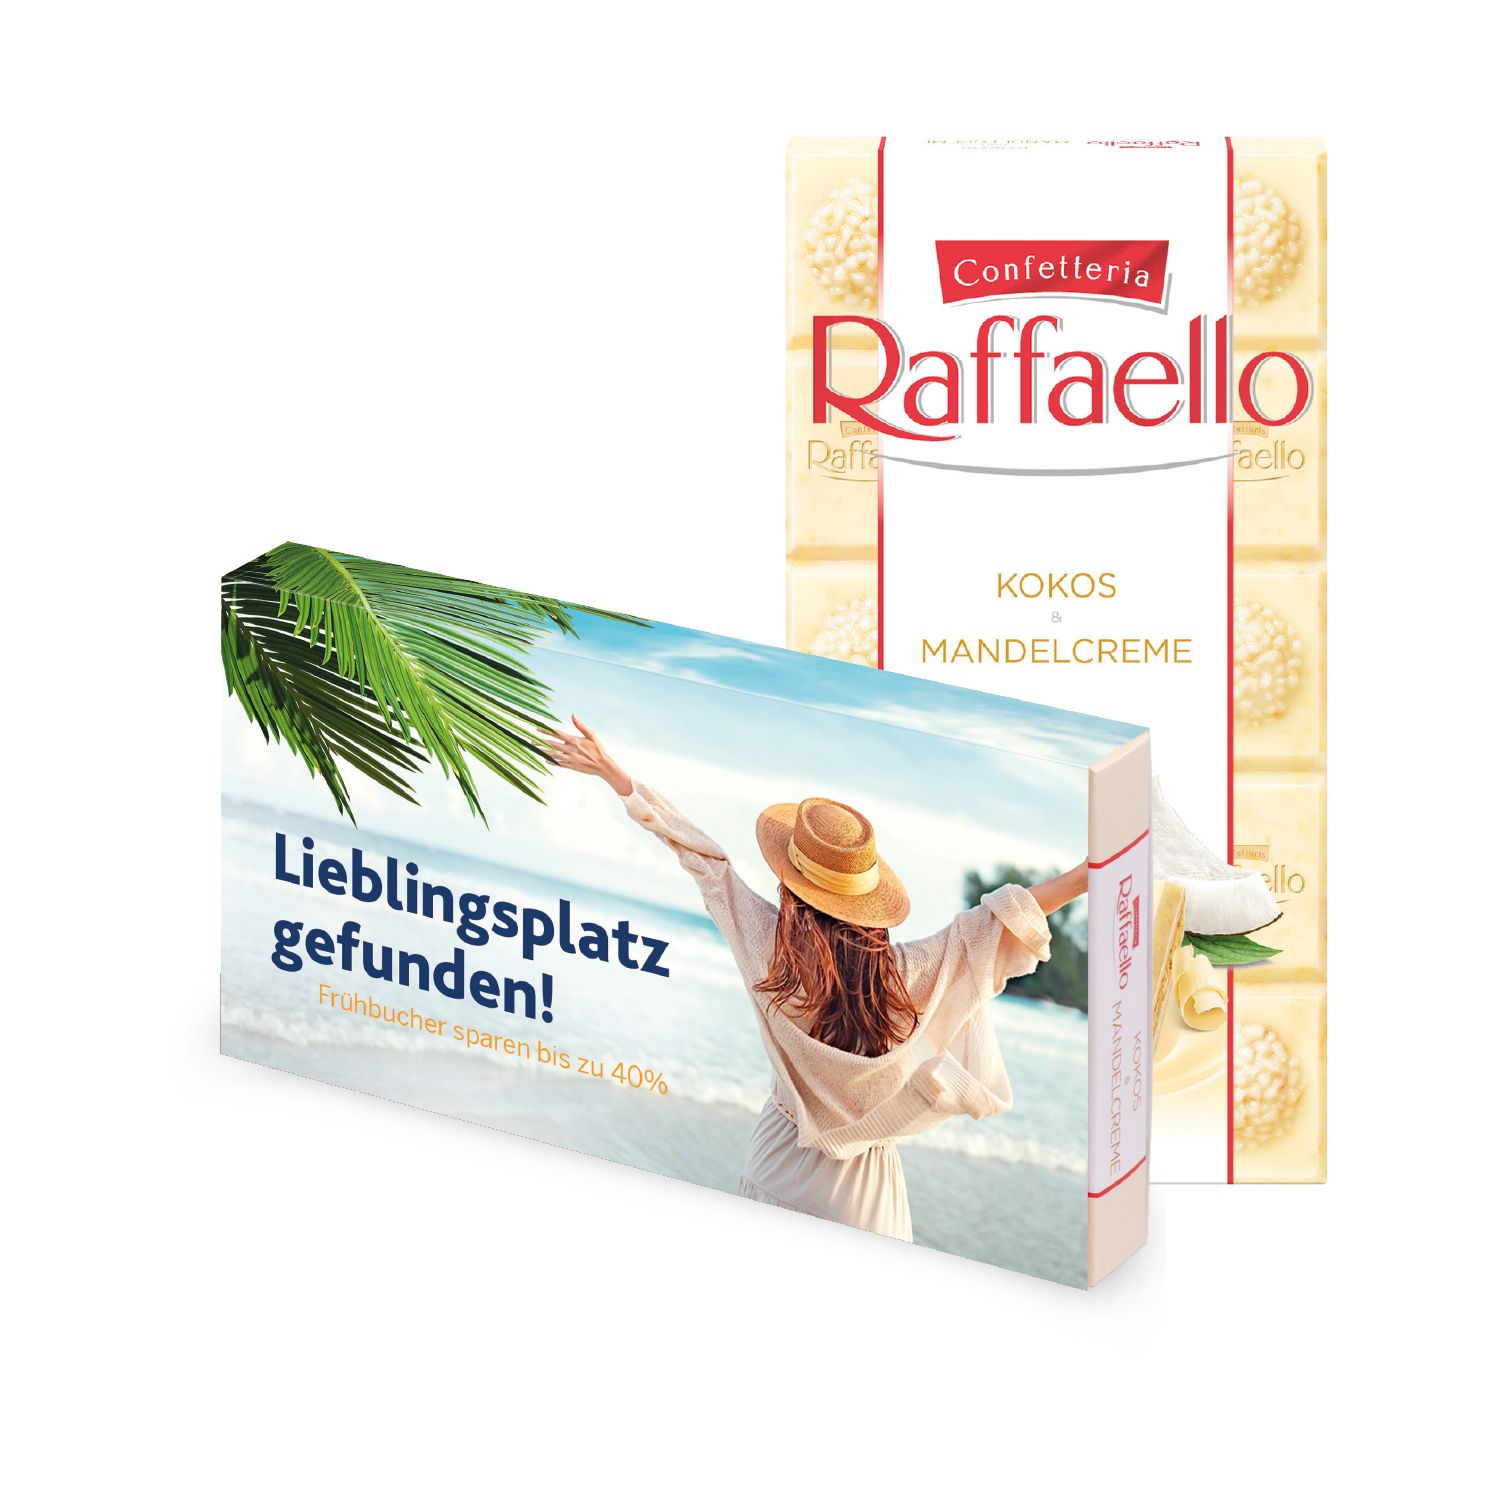 Ferrero Raffaello Tafel 90g, inkl. 4-farbigem Druck